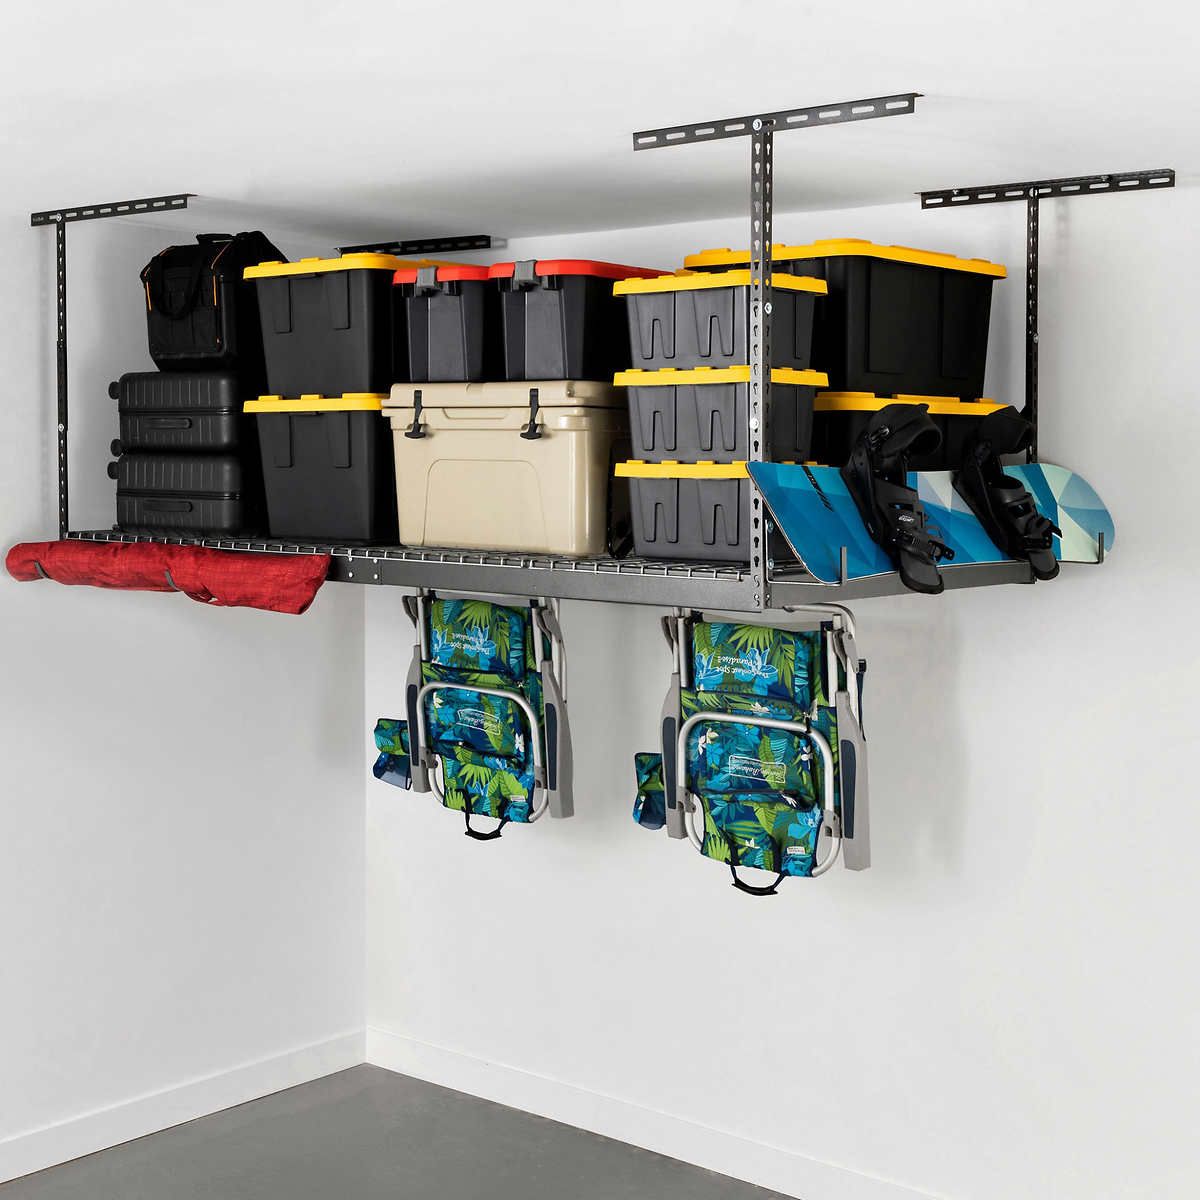 Overhead Garage Storage Rack, Hanging Shelves From Ceiling Joists